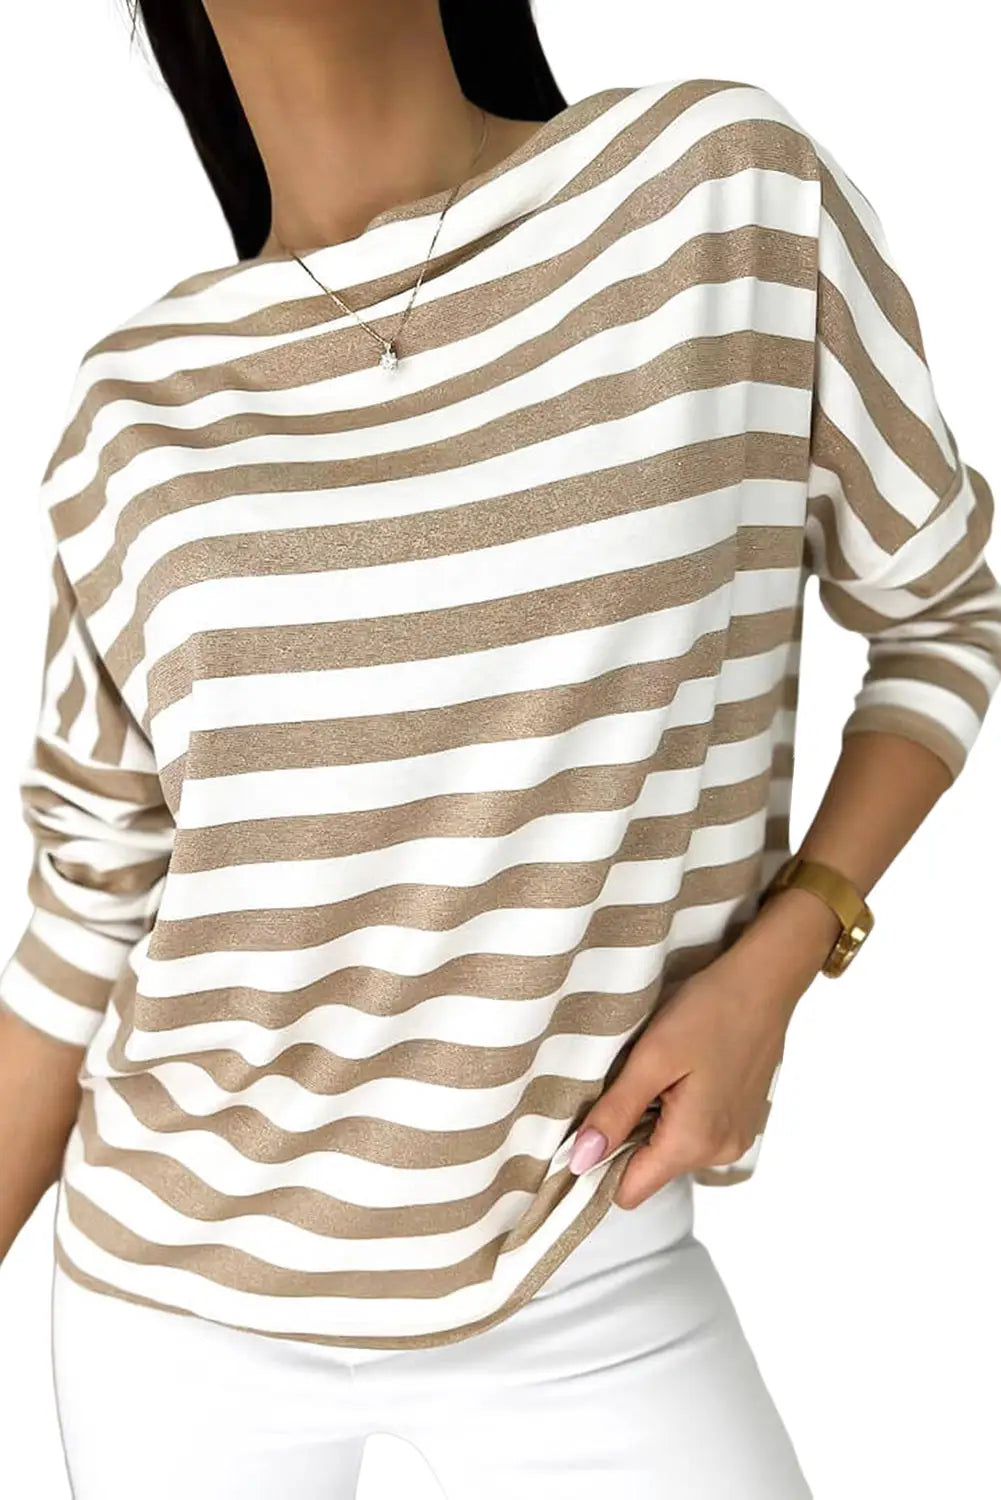 Khaki striped boat neck long sleeve top - tops